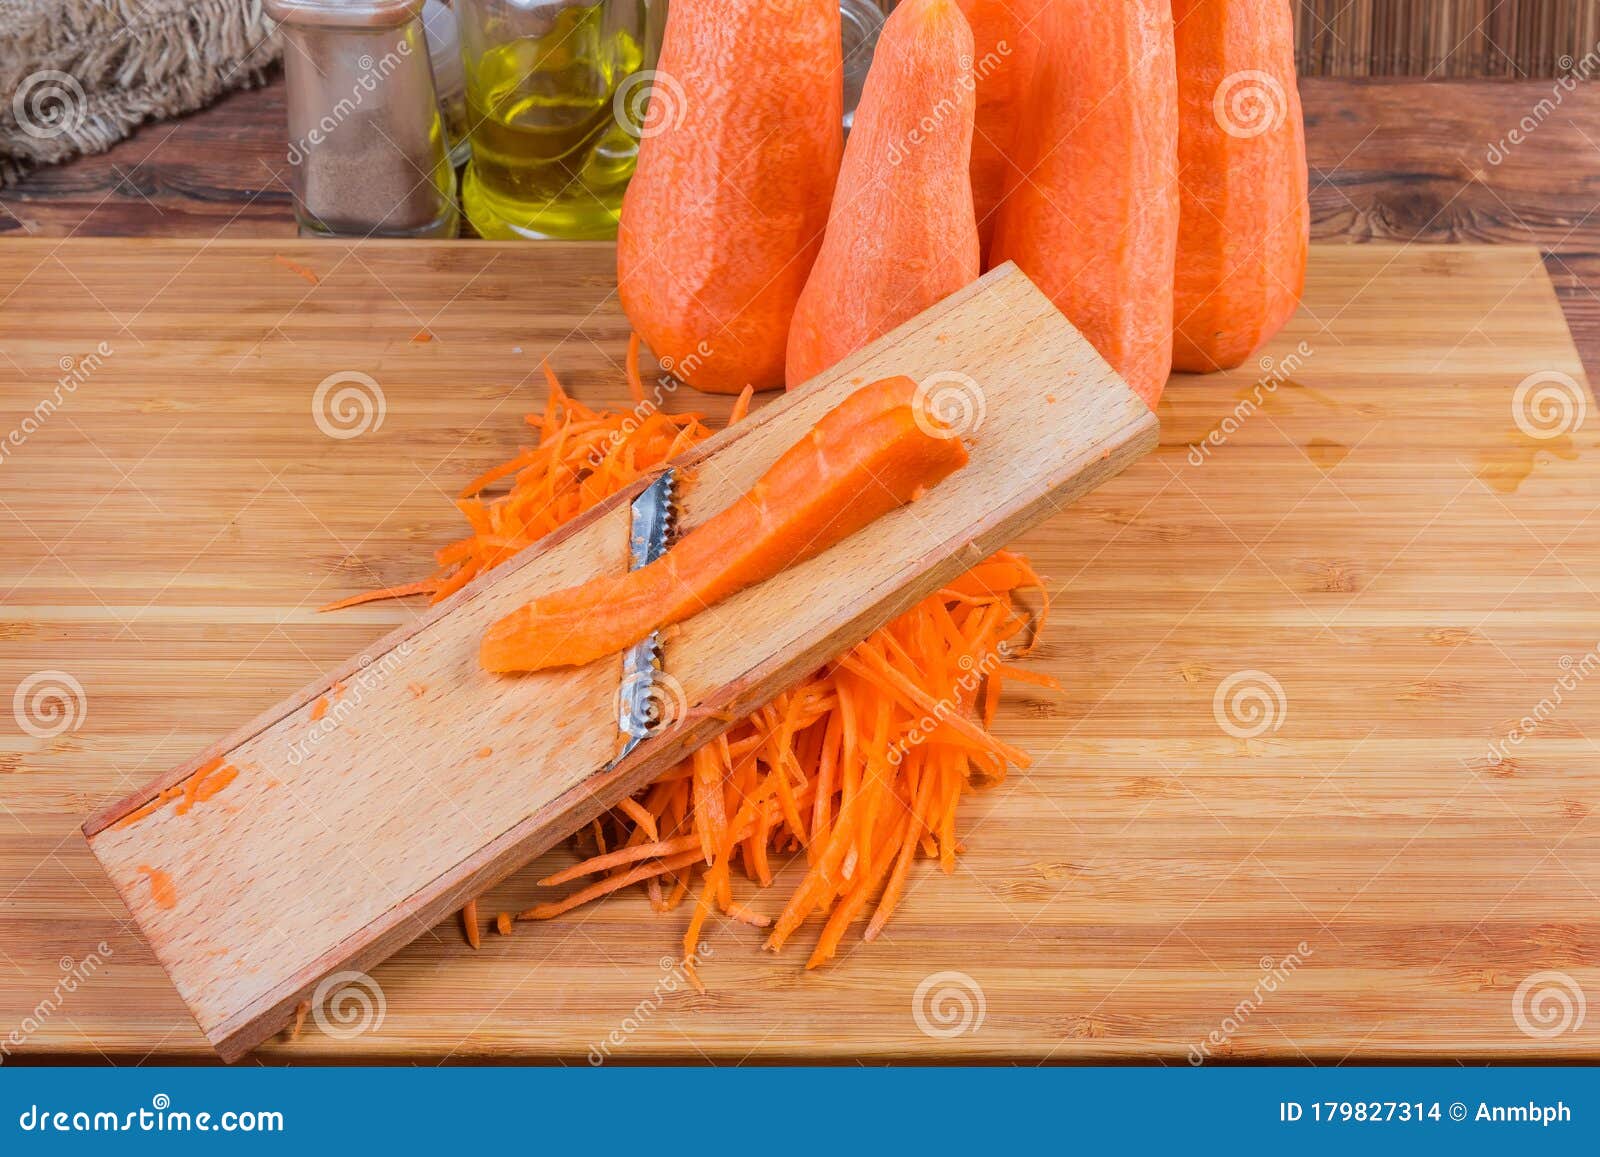 https://thumbs.dreamstime.com/z/carrot-shredding-grater-korean-salad-prepare-wooden-stainless-steel-blade-cutting-board-against-cleaned-179827314.jpg